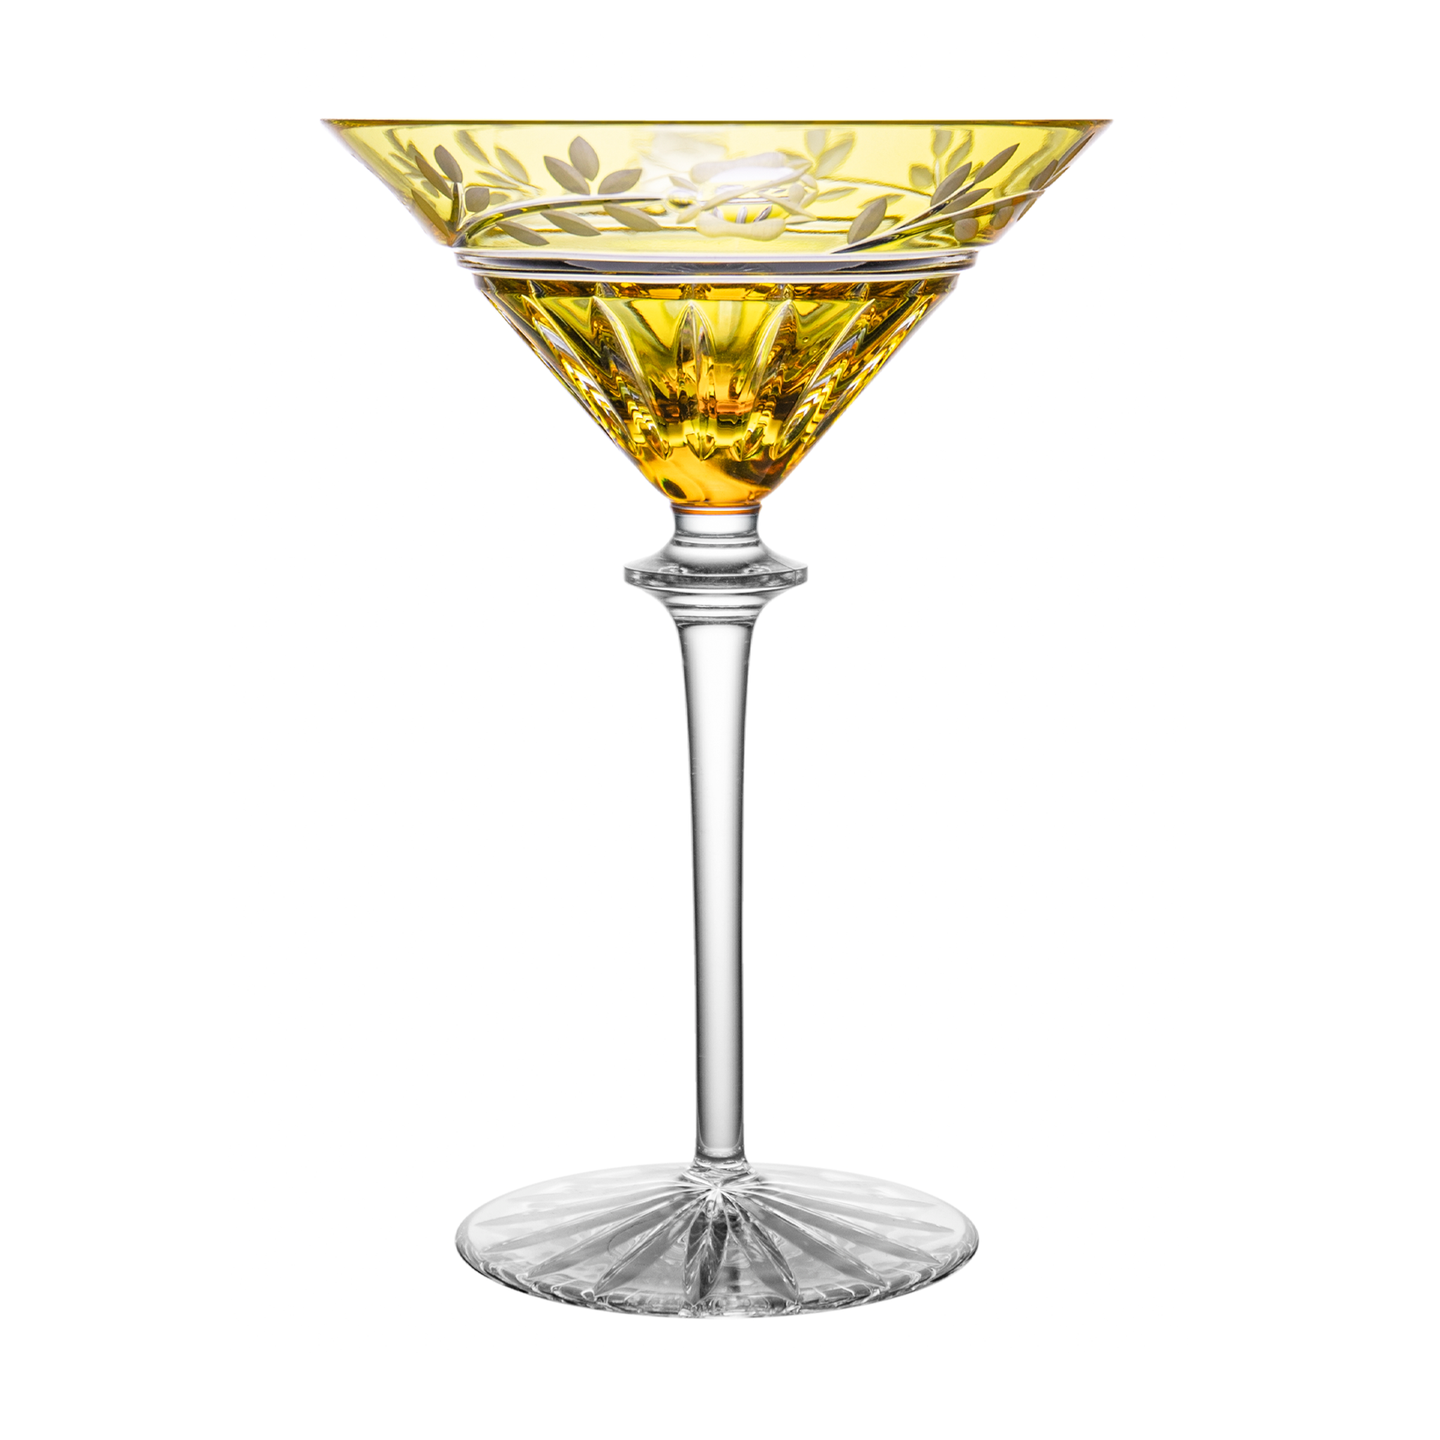 Proinnseas Golden Martini Glass